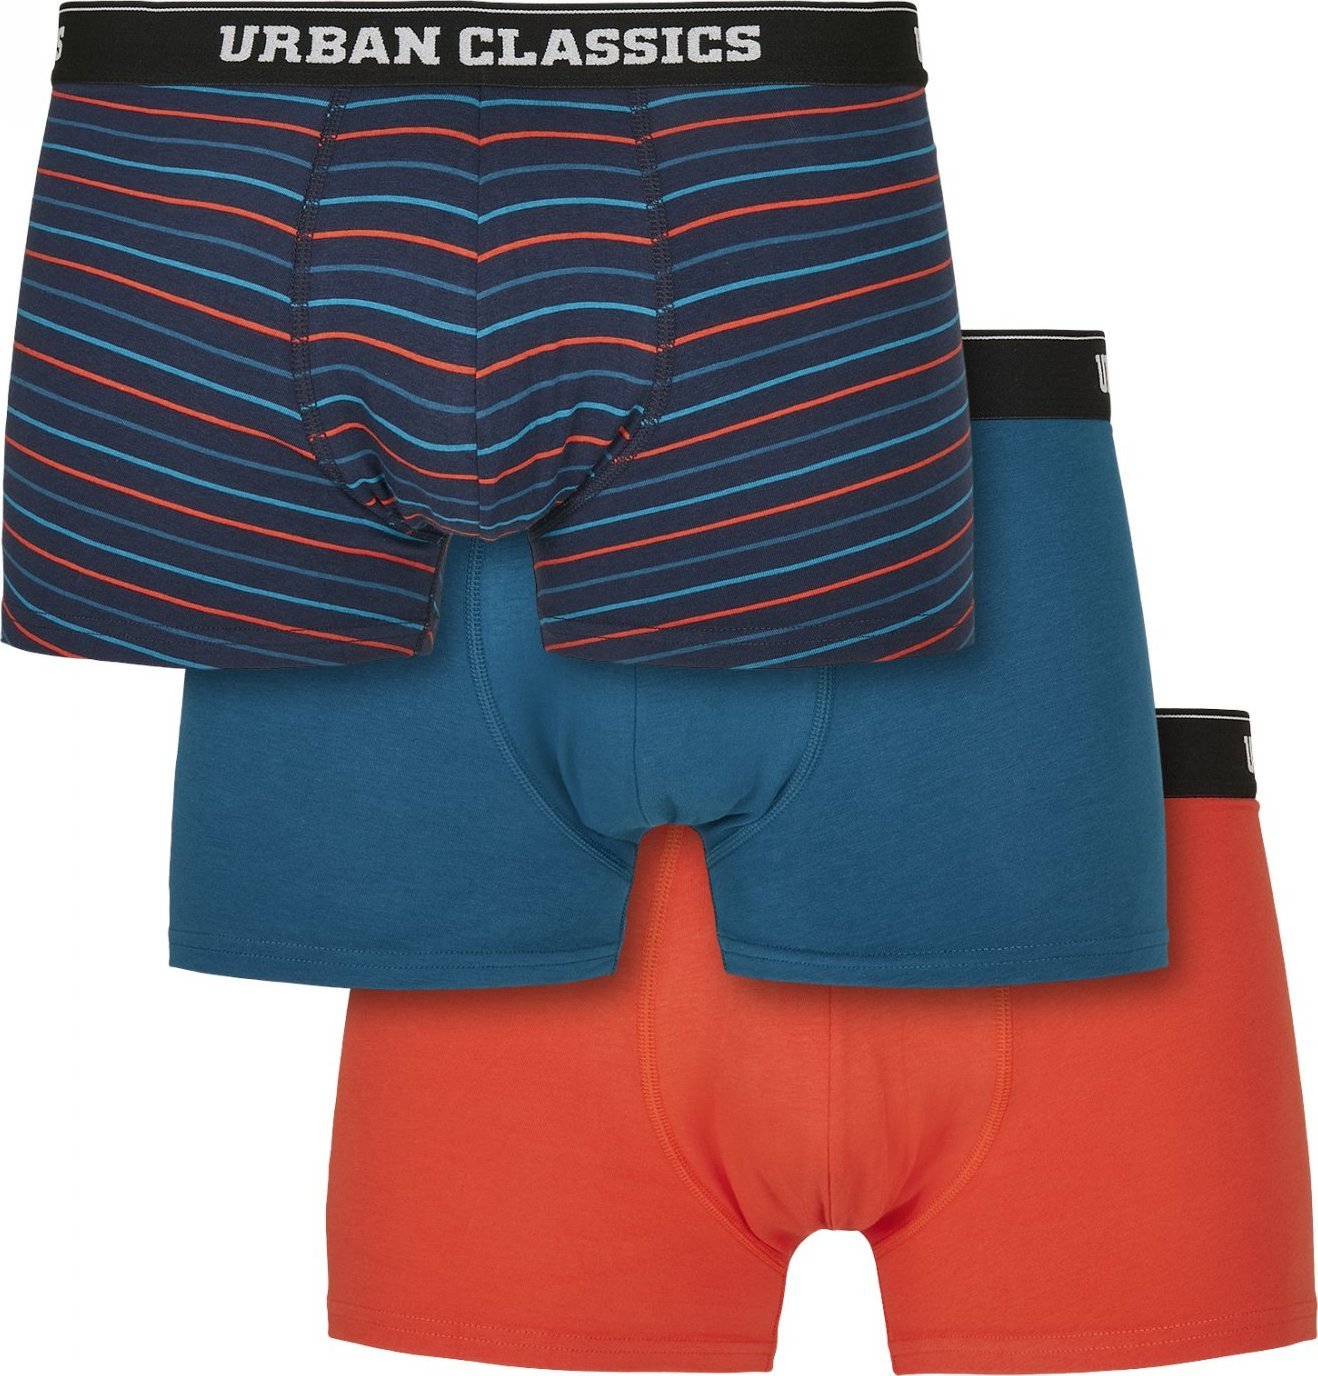 Slim fit boxerky Urban Classics s elastanem, 3 ks v balení Barva: boxerky-UC-4, Velikost: L